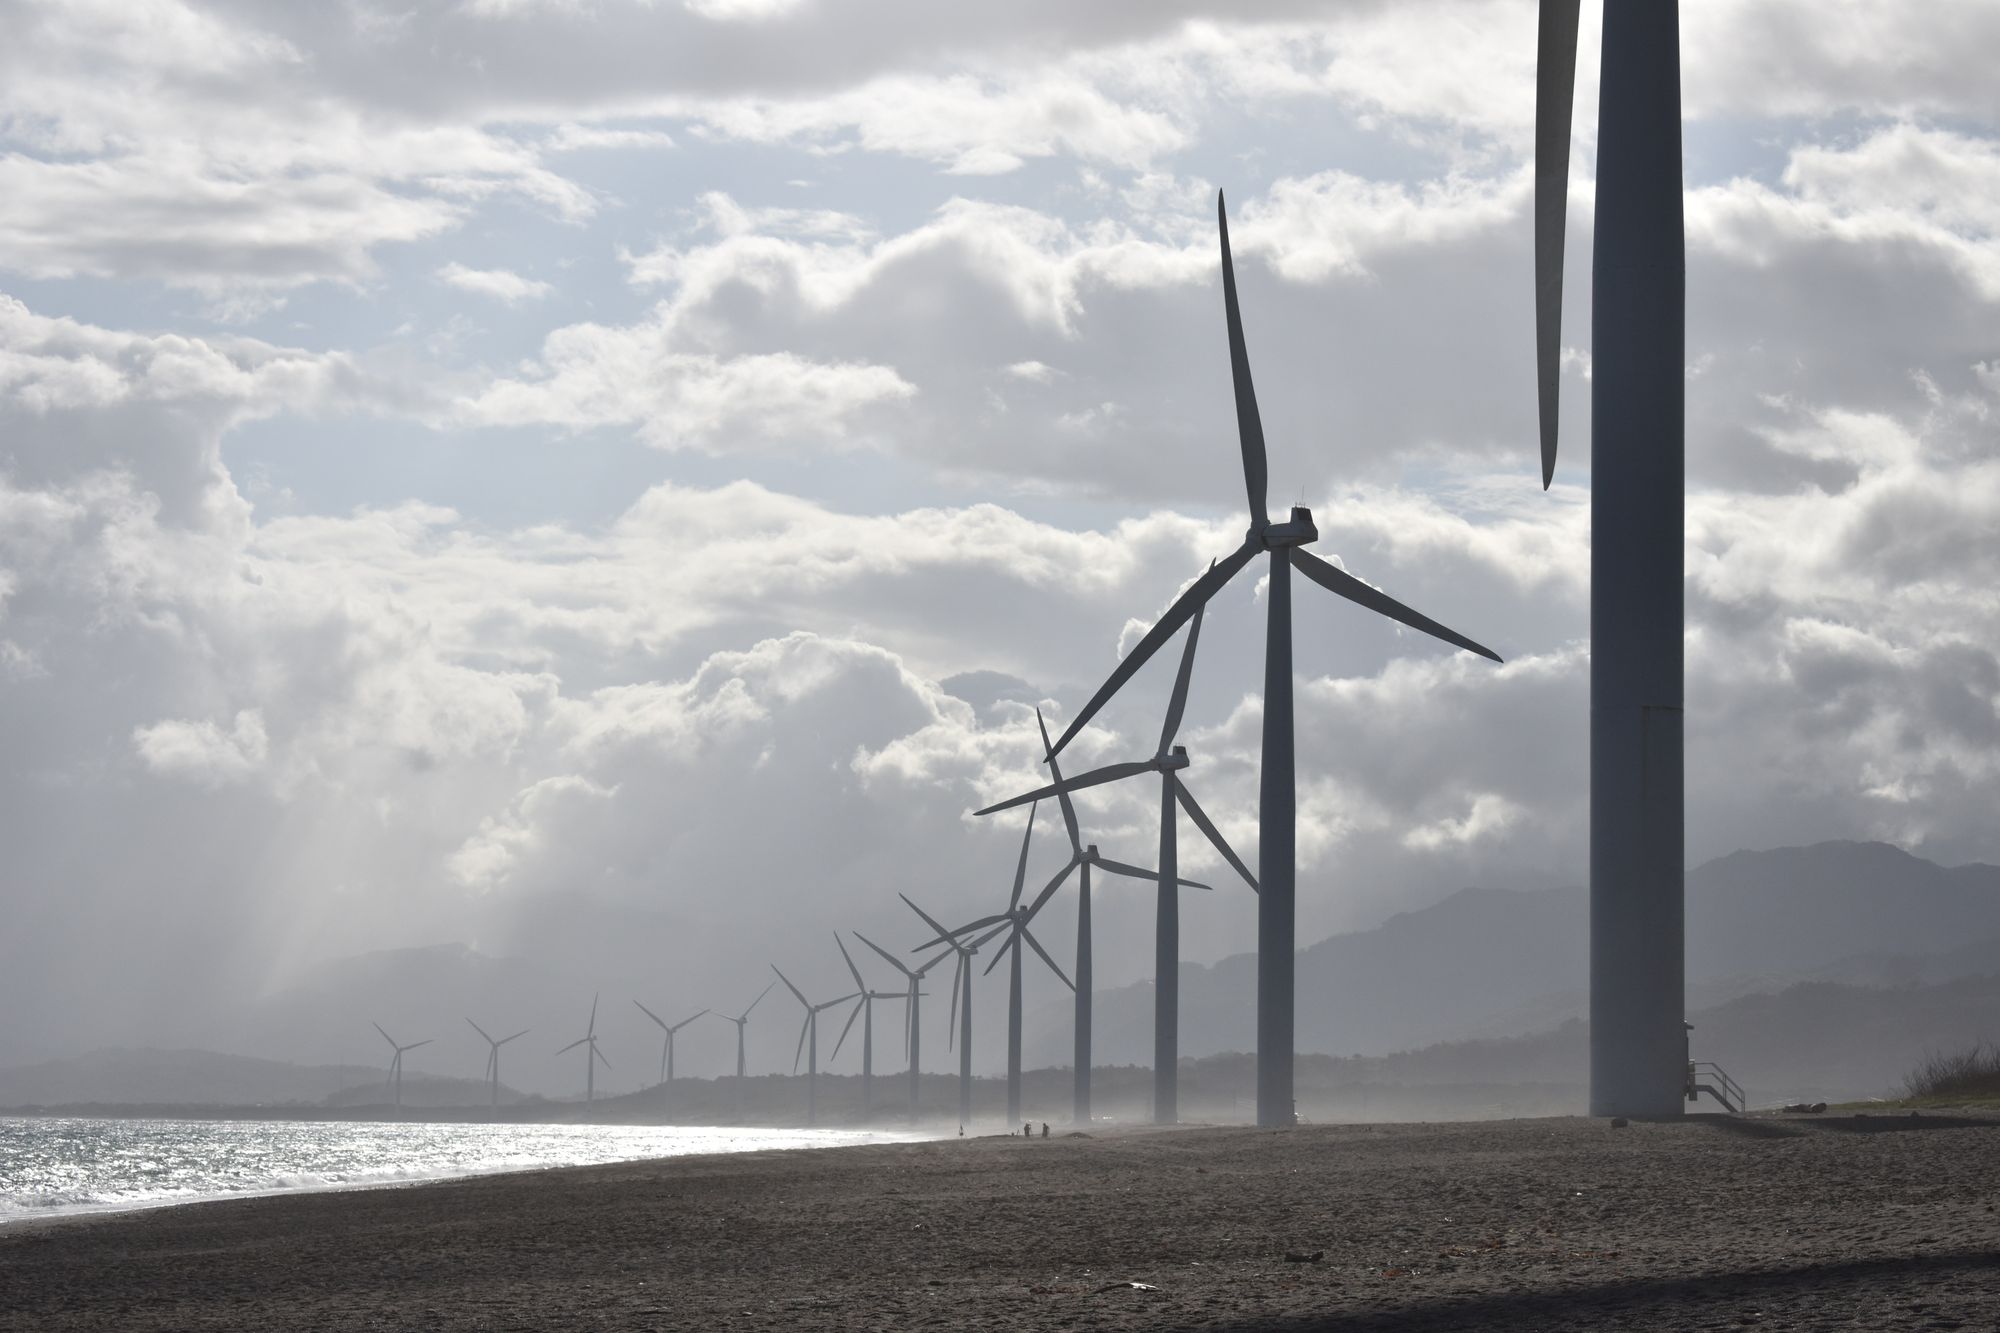 A line of wind turbines on a beach